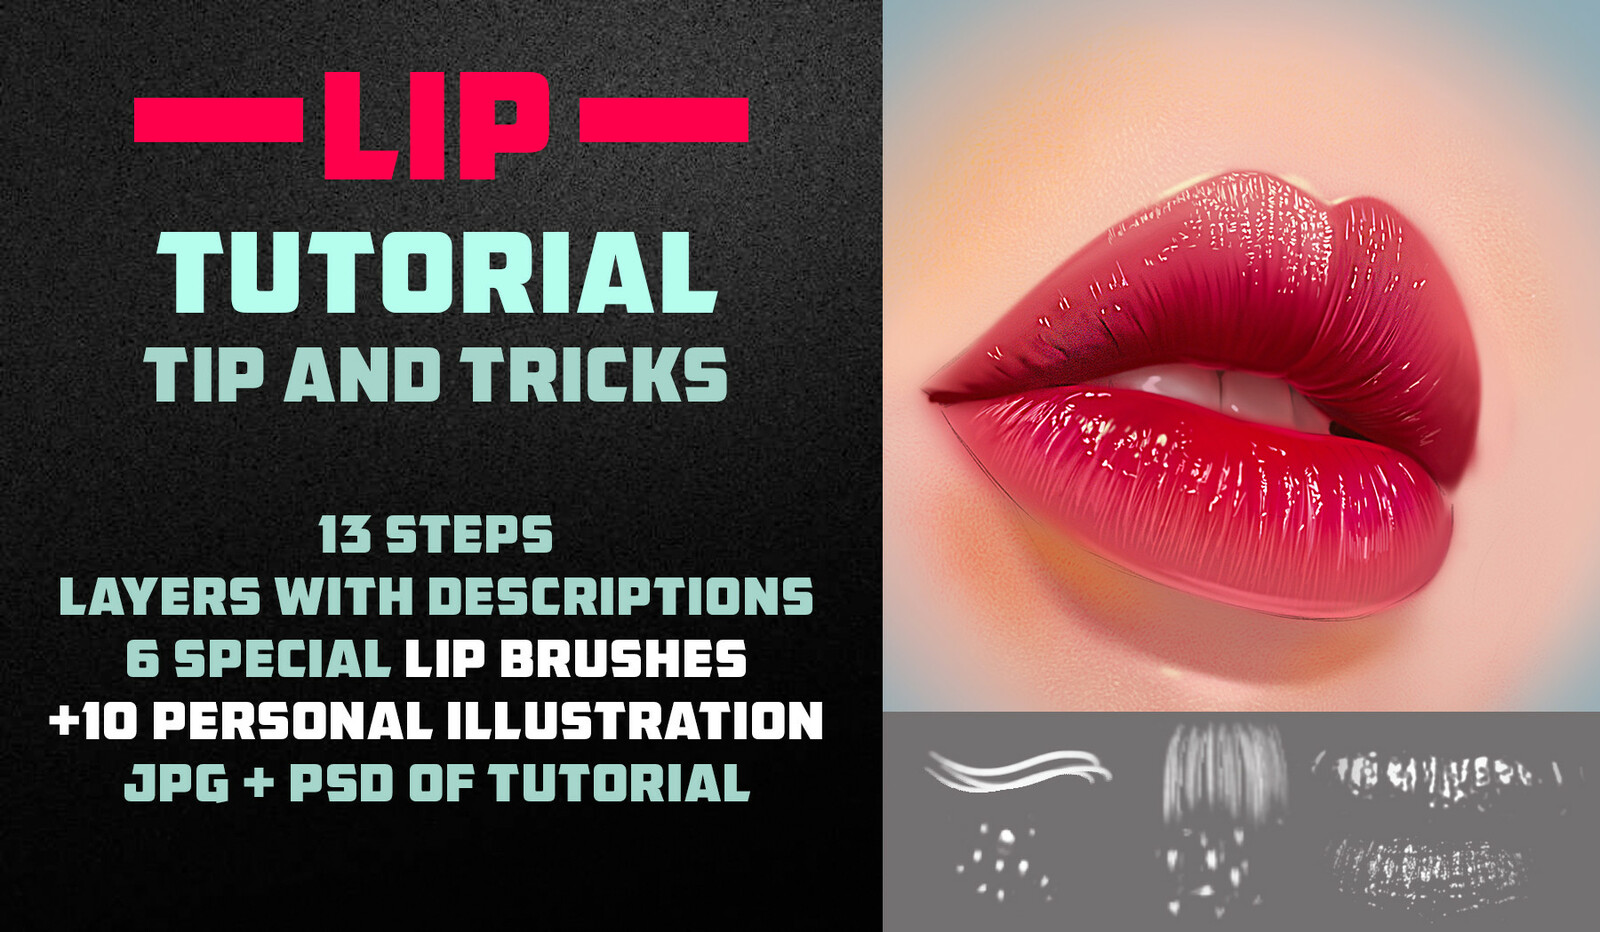 Artstation Marketplace Link:
https://www.artstation.com/vurdem/store/mygb/lip-tutorial-2-6-brushes-tip-and-tricks-photoshop
